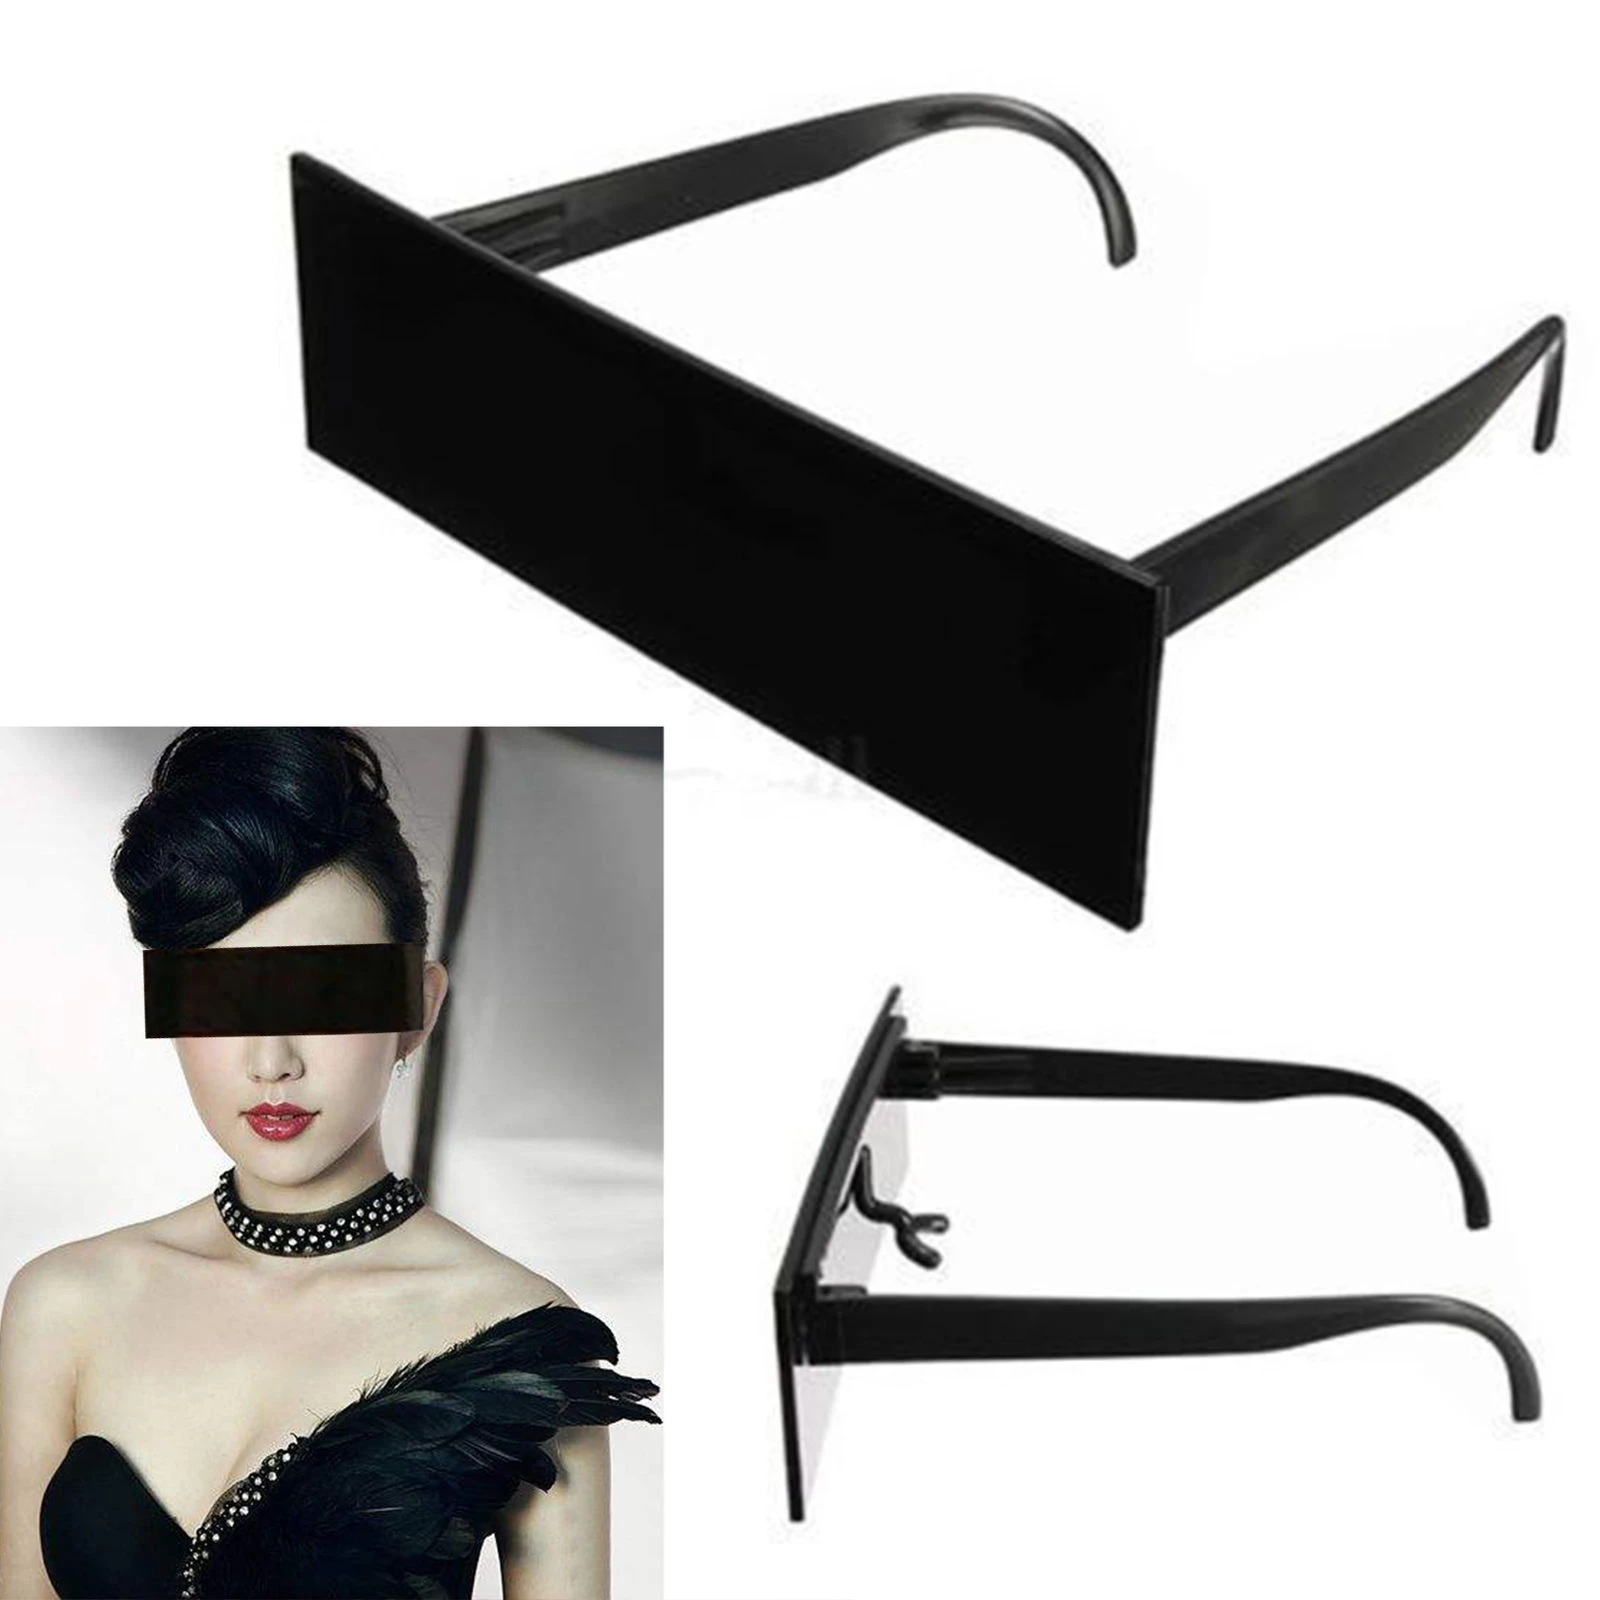 One-piece Black Bar Sunglasses Internet Censorship Cosplay Costume Xmas Party